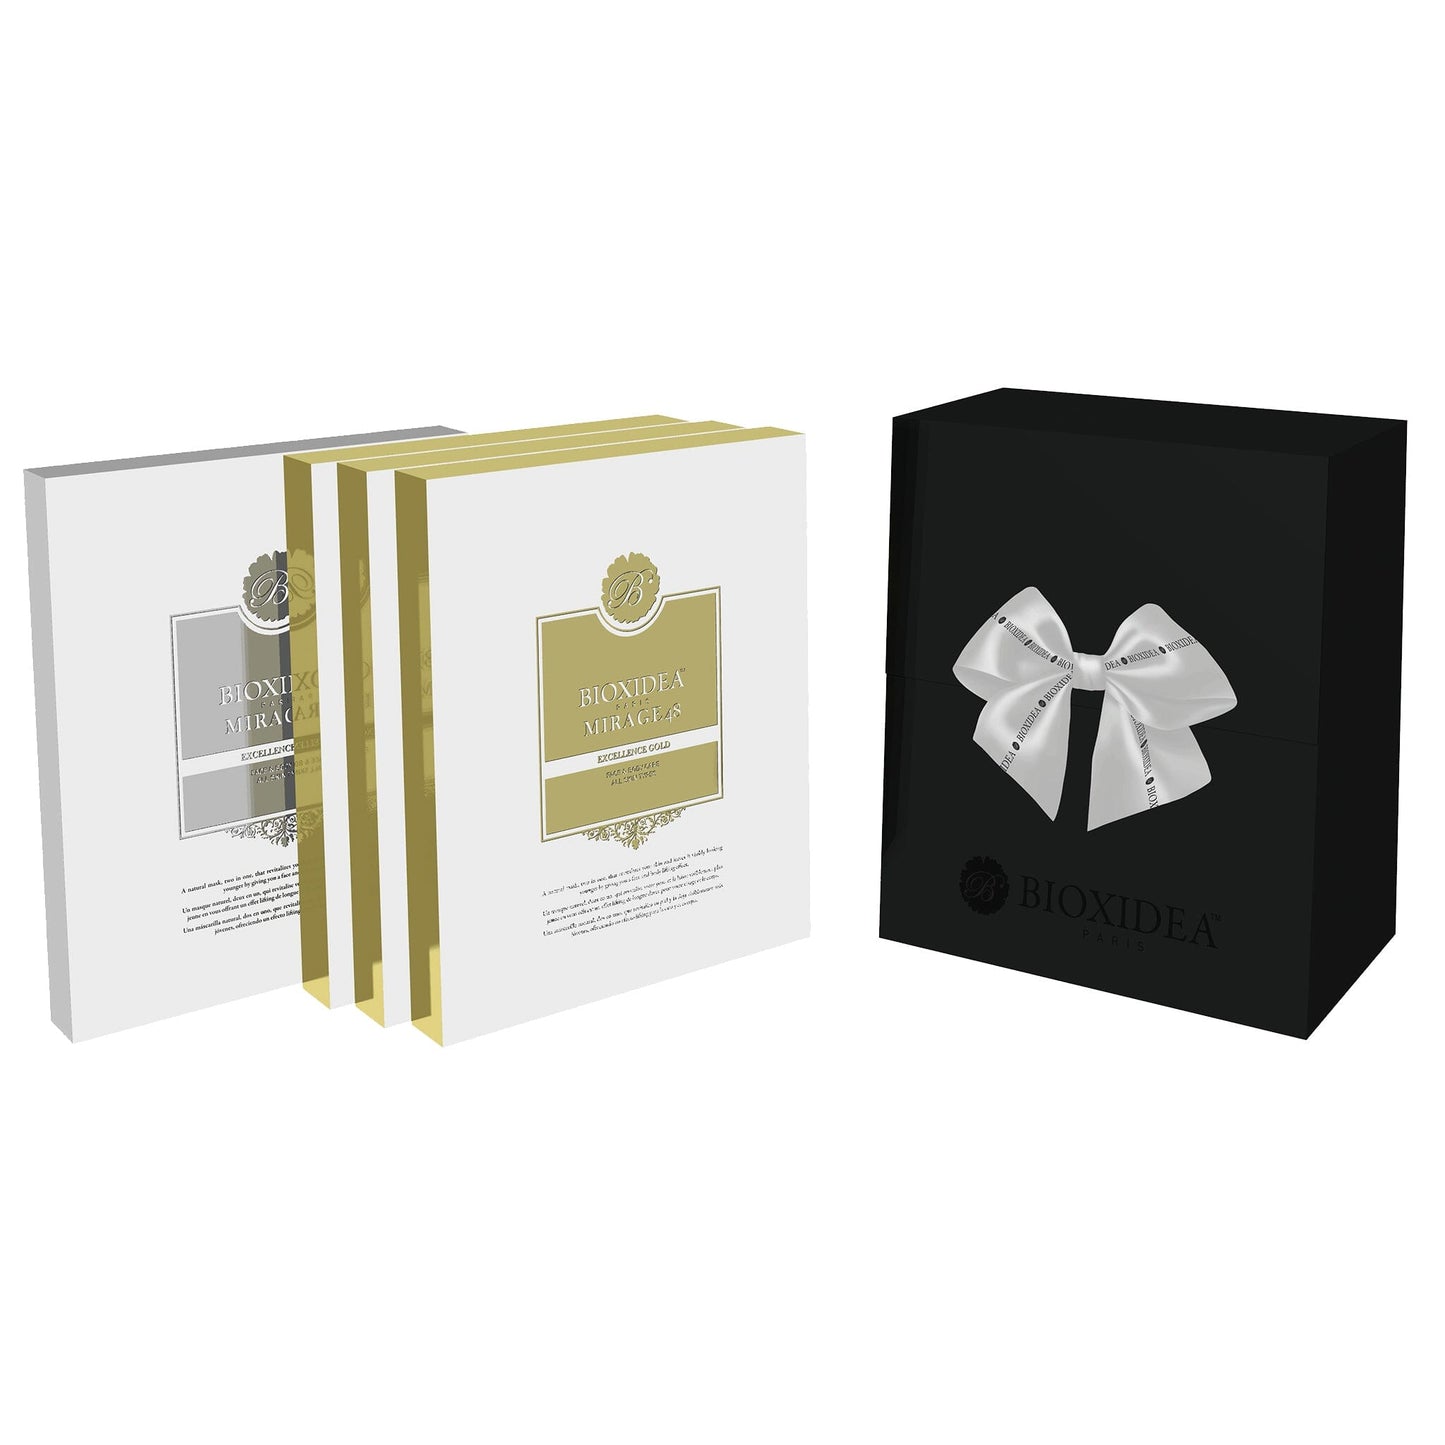 Bioxidea Mirage48 Deluxe Gift Set Gift Set 